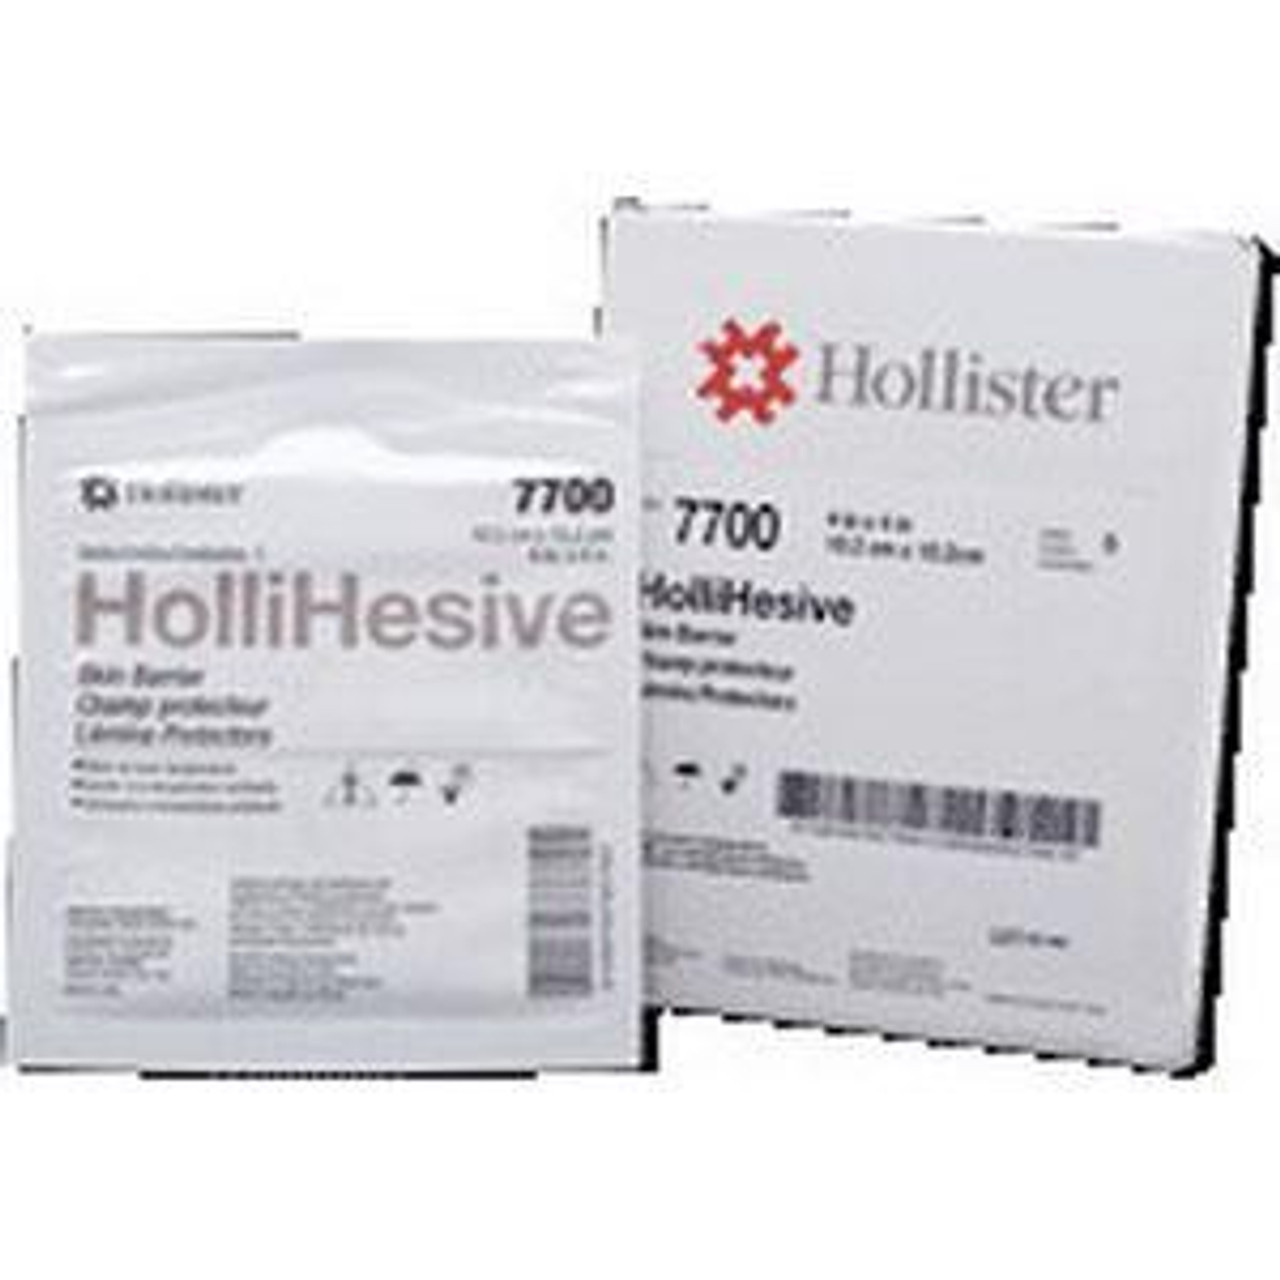 HOLLIHESIVE Skin Barrier 4'X4' (10X10CM) BX/5 (HOL-7700) (Hollister 7700)